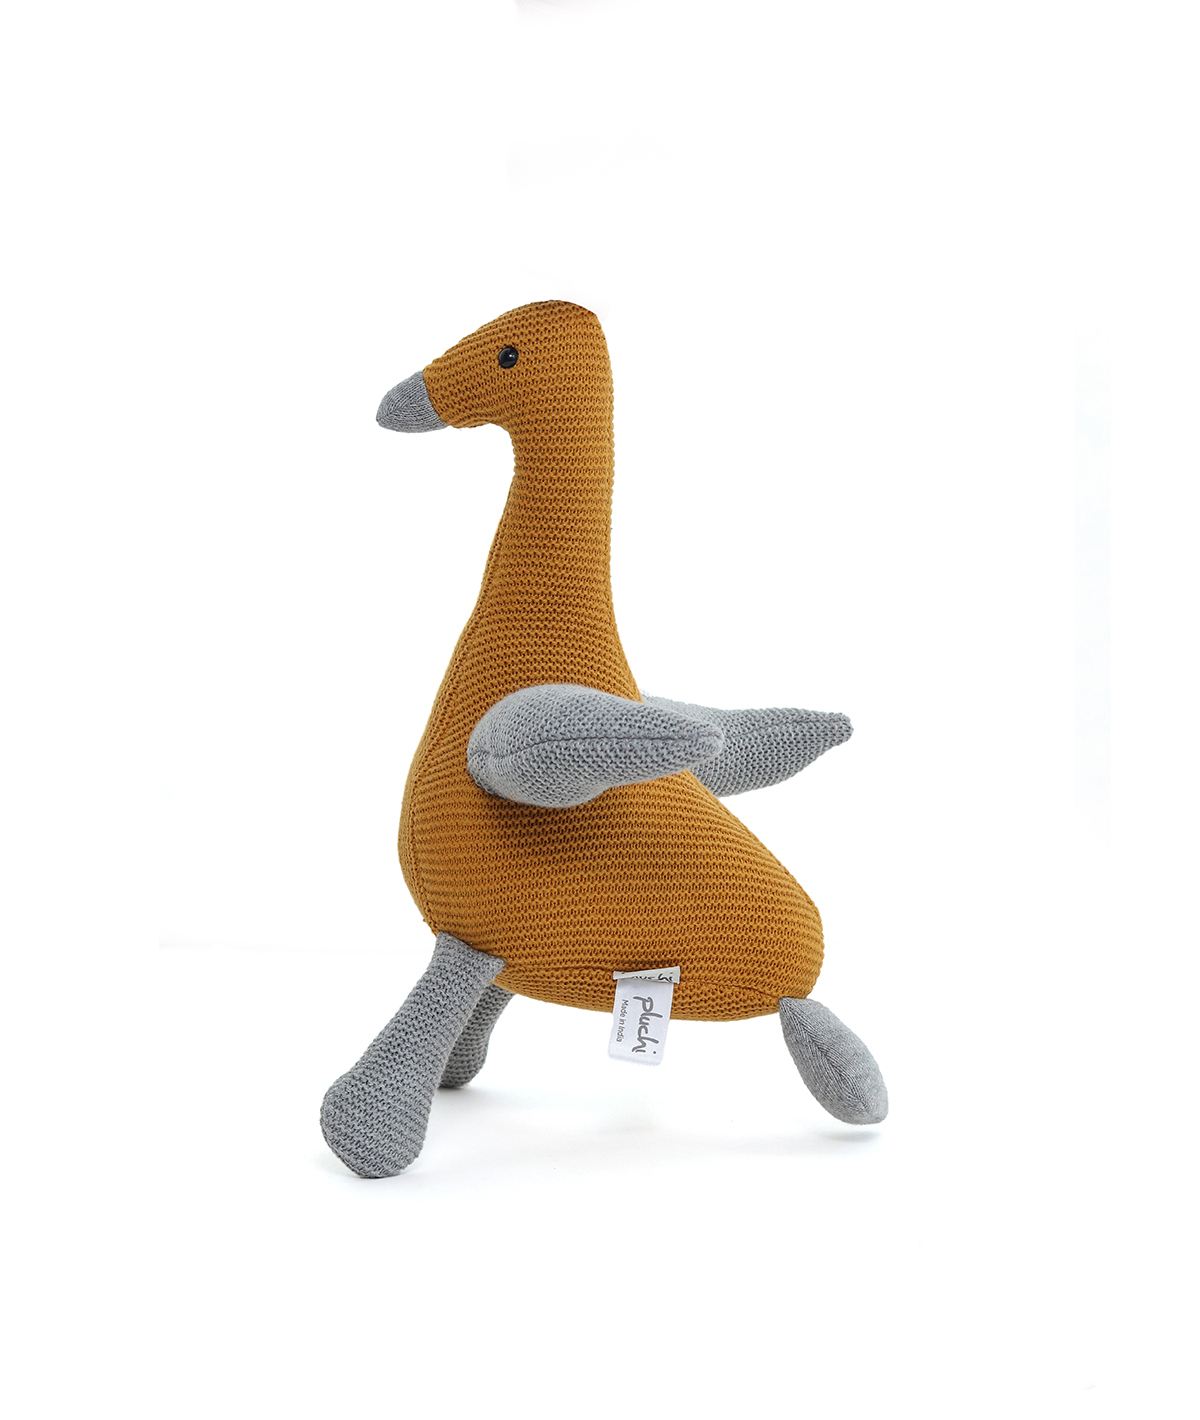 Chuckles Bird Cotton Knitted Stuffed Soft Toy (Mustard & Light Grey Melange)